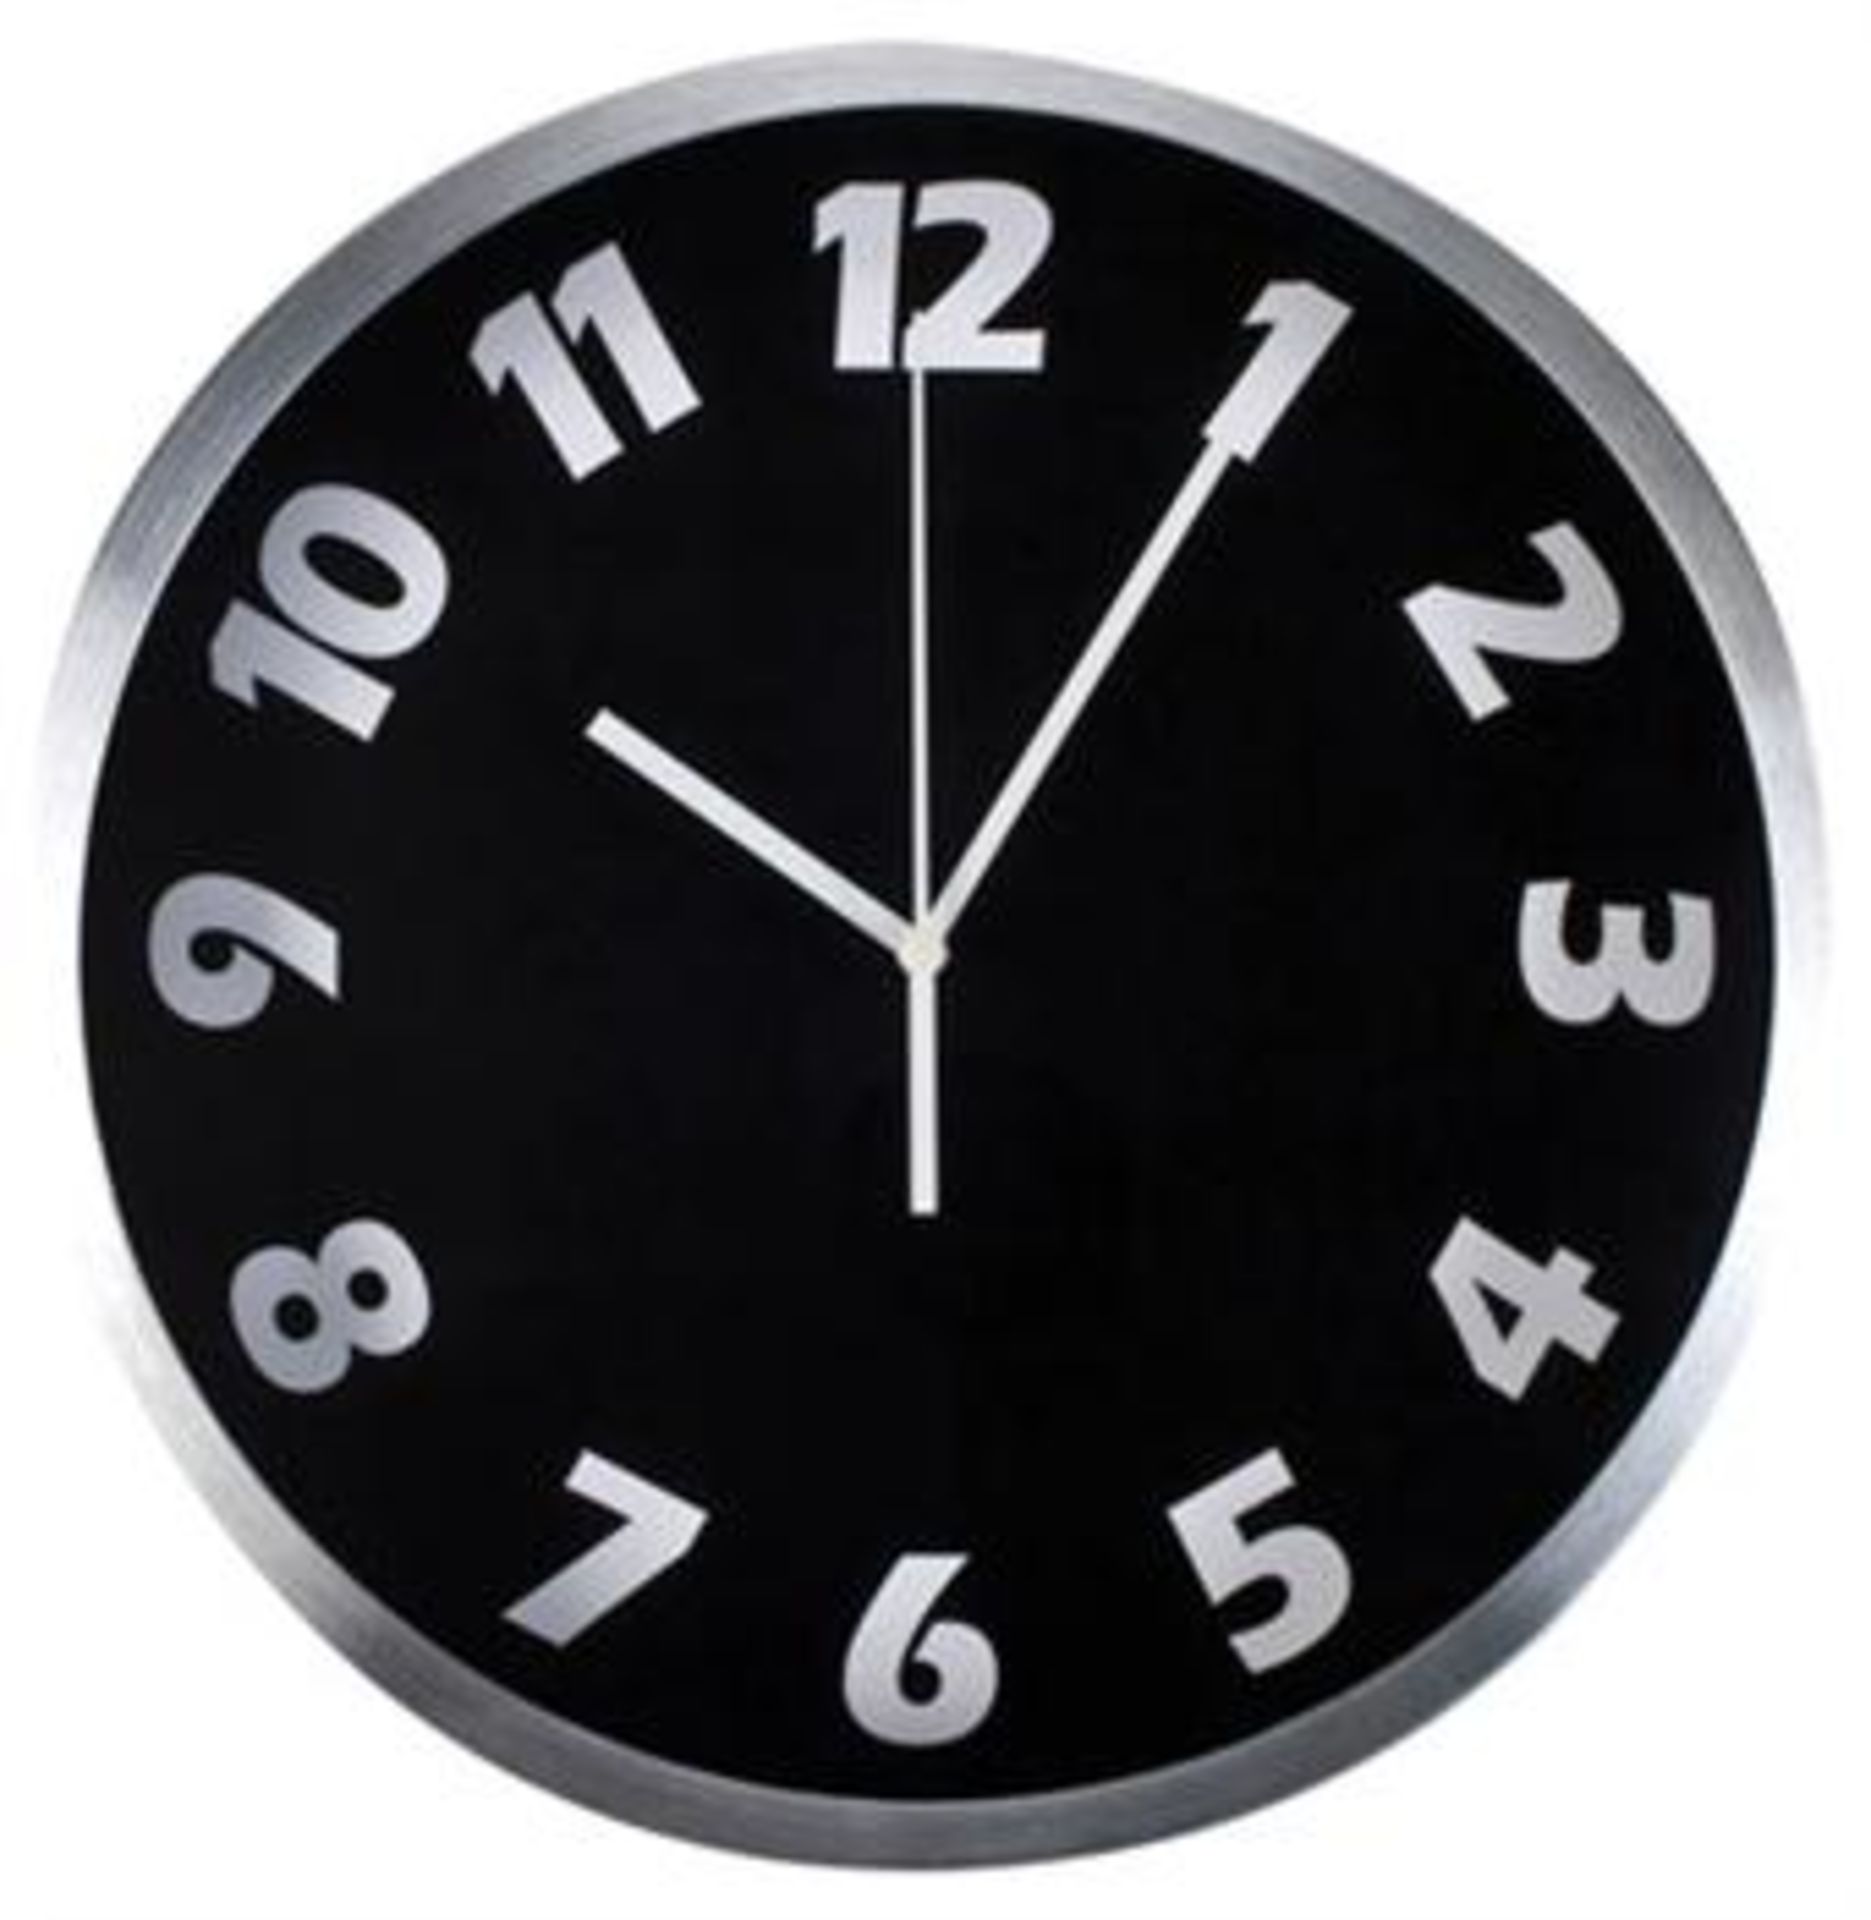 V *TRADE QTY* Brand New Brushed aluminium case wall clock 30cm diameter RRP 39.99 X 4 YOUR BID PRICE